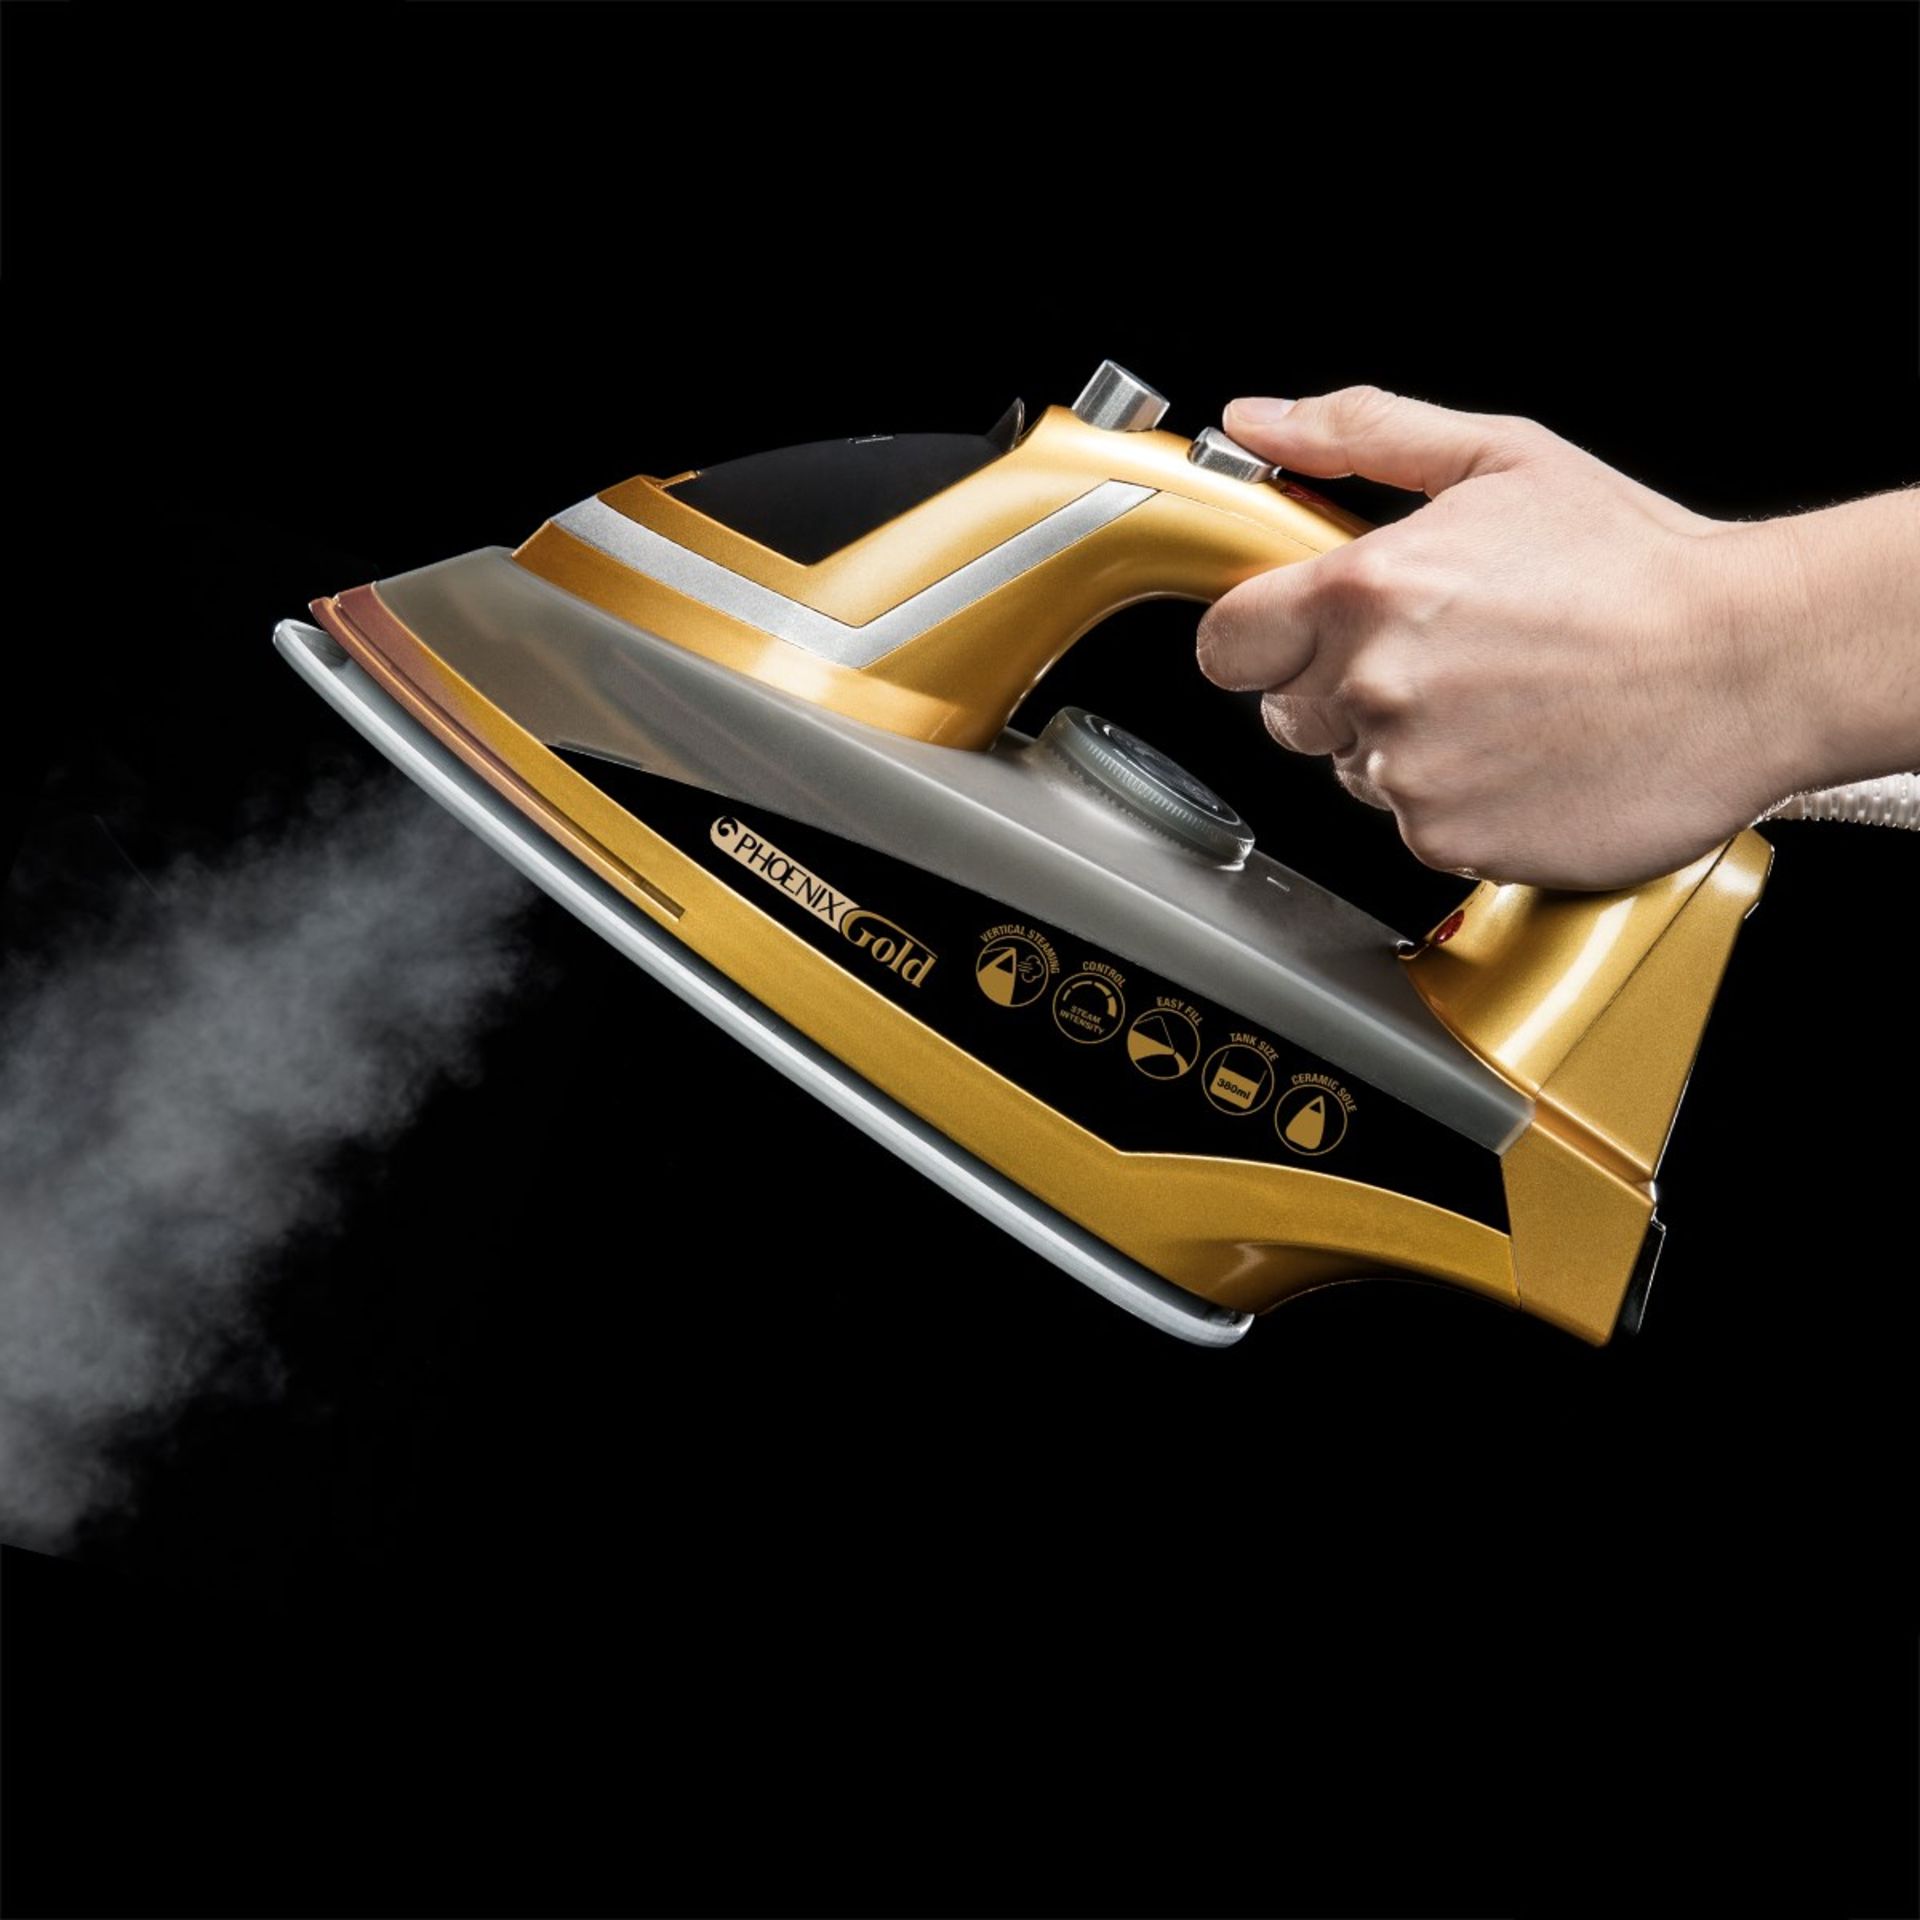 JML Phoenix Gold Ceramic Sola Plate Iron Steam Generator Continuous Steam (Unboxed) - Image 2 of 2